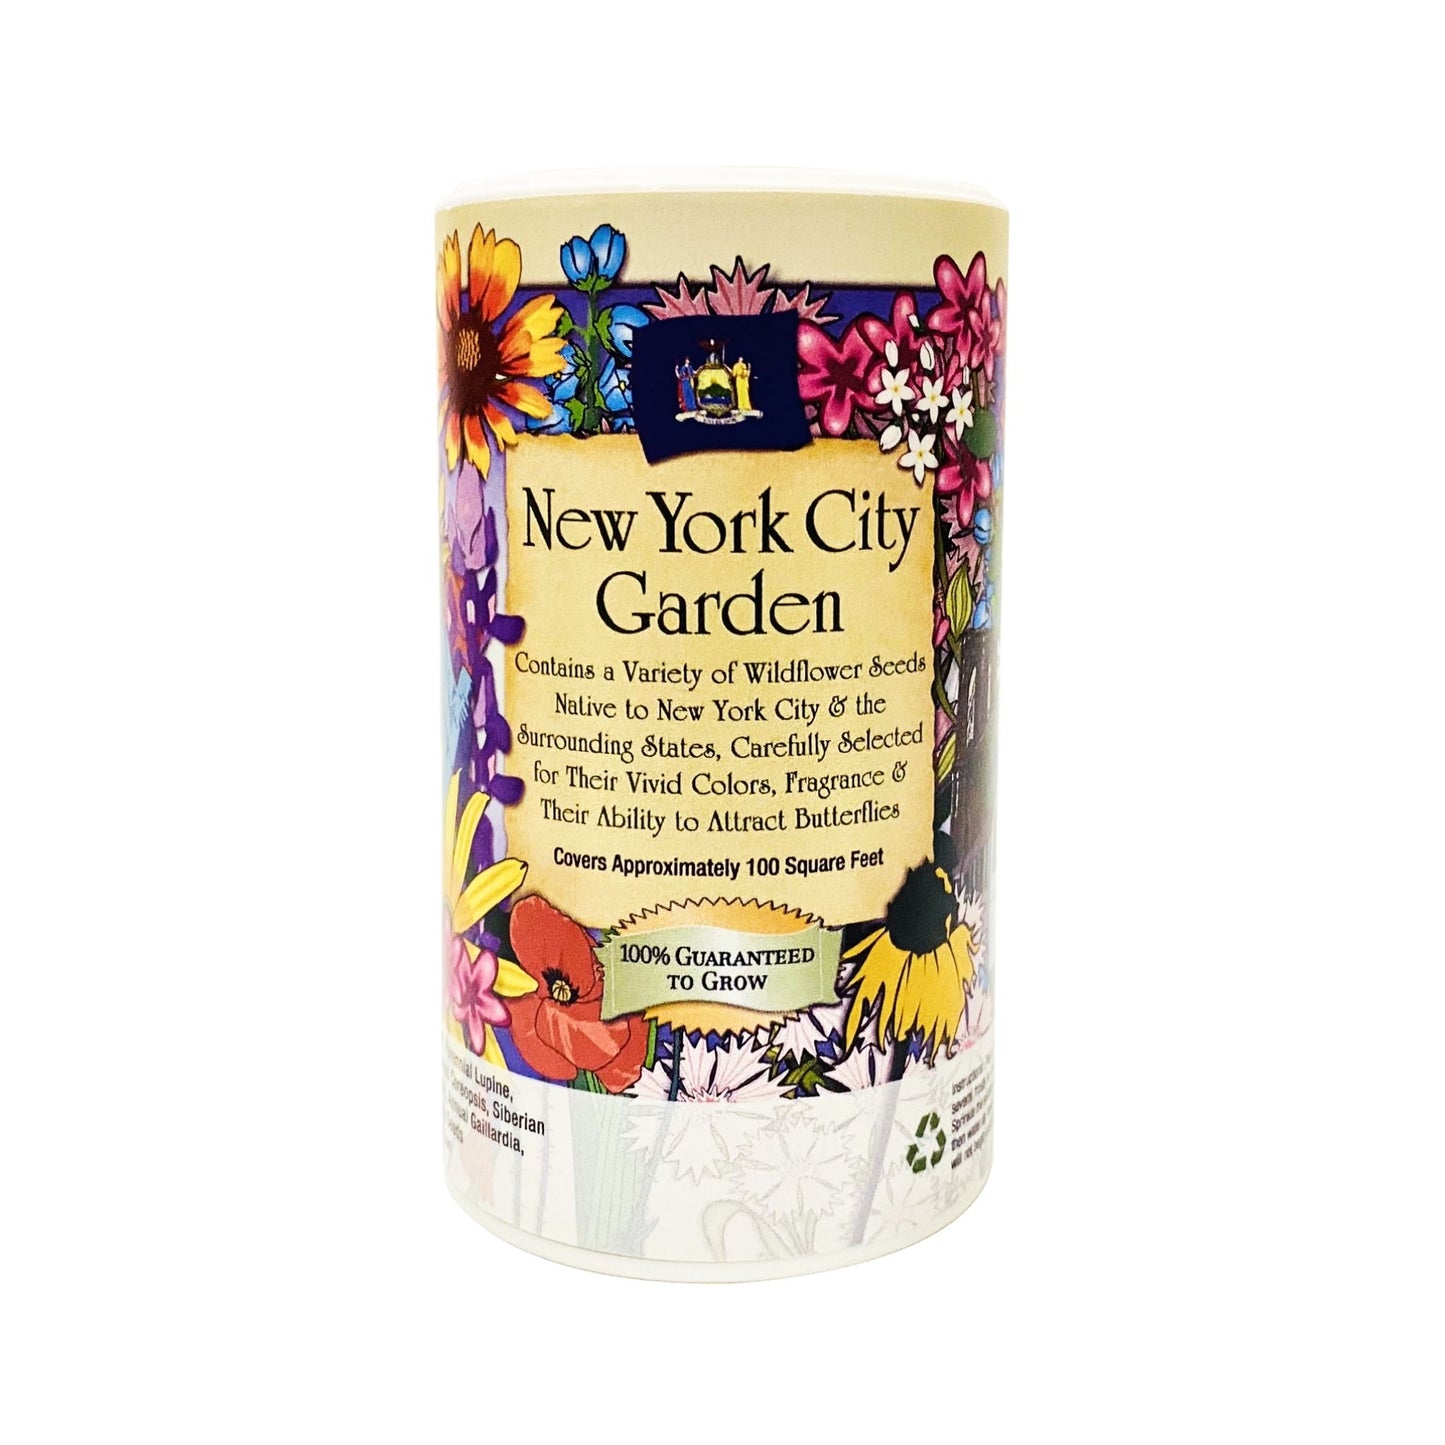 New York City Garden Shaker Can